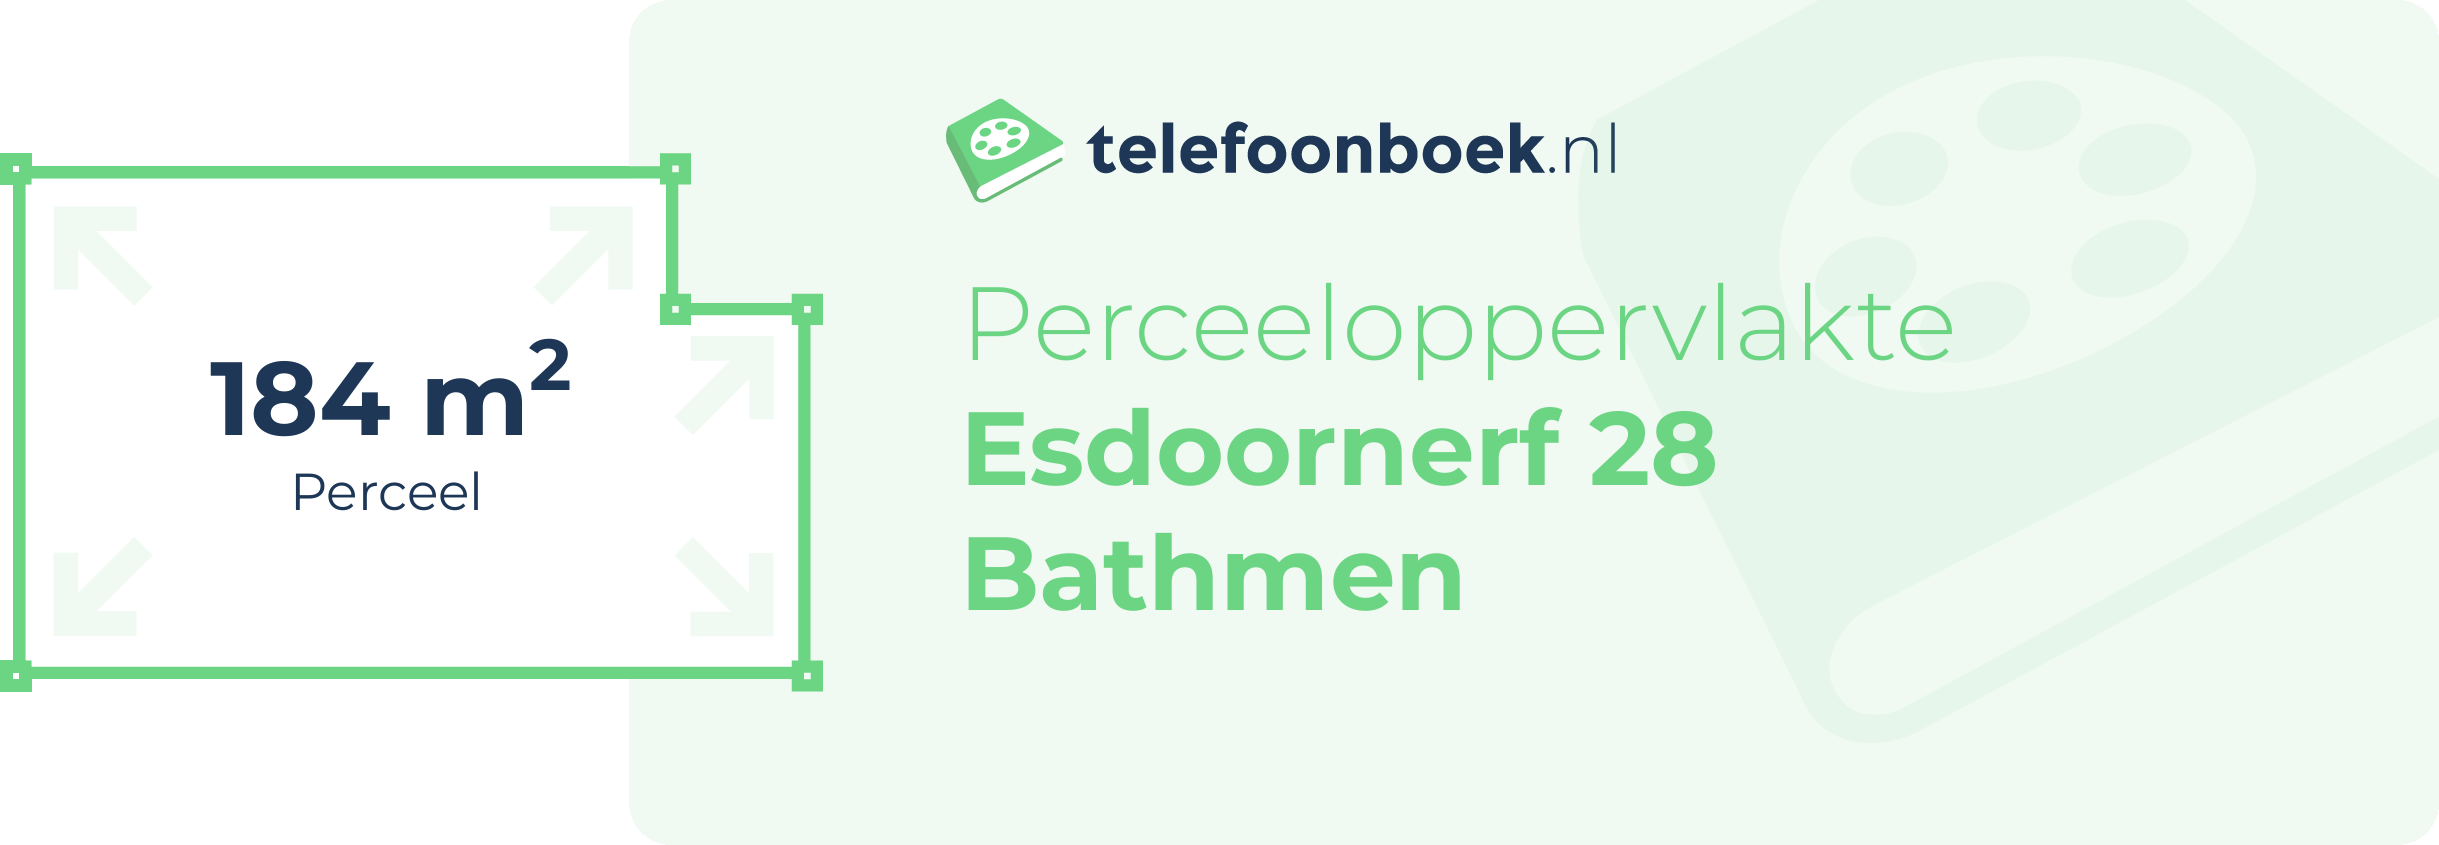 Perceeloppervlakte Esdoornerf 28 Bathmen